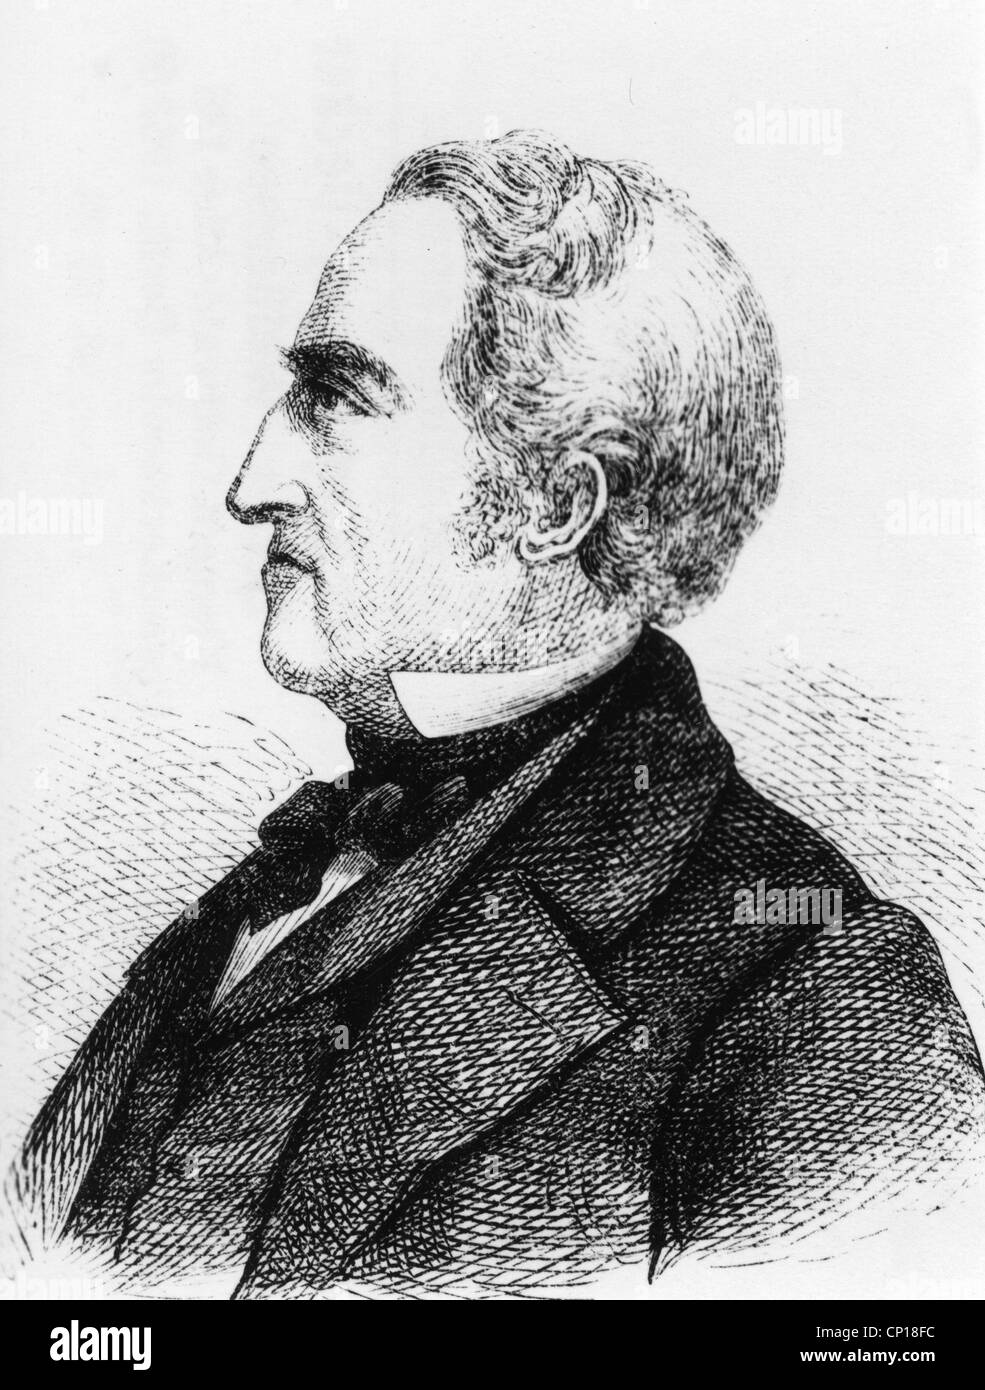 Martius, Carl Friedrich Philipp von, 17.4.1794 - 13.12.1868, German botanist, explorer, portrait, profile, wood engraving, 19th century, , Stock Photo